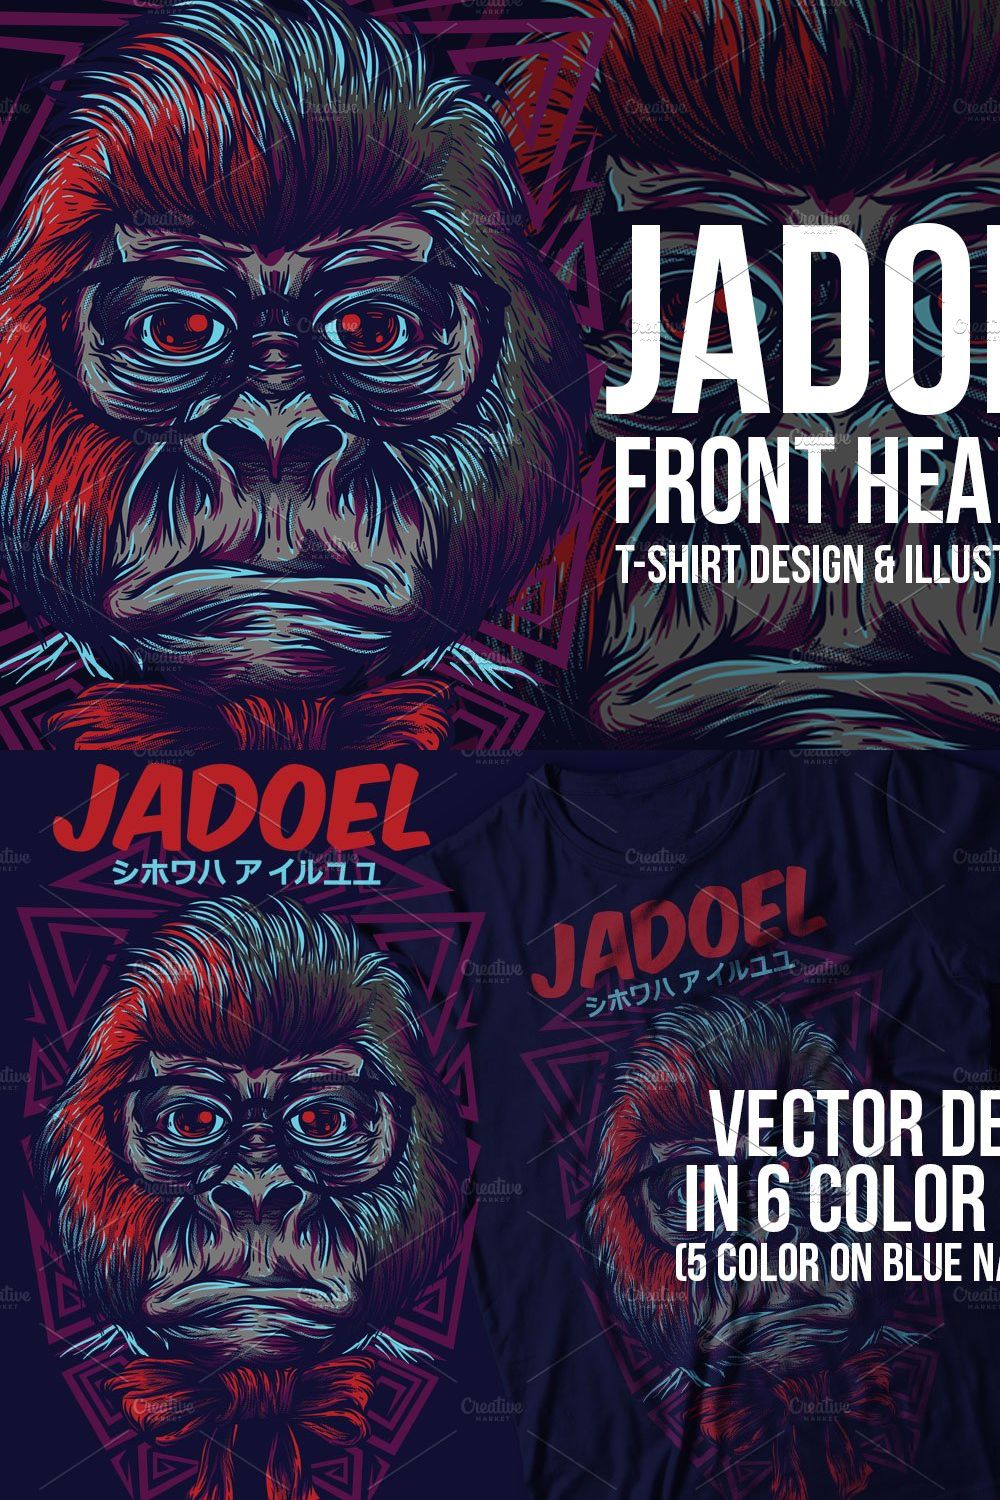 Jadoel Front Head Illustration pinterest preview image.